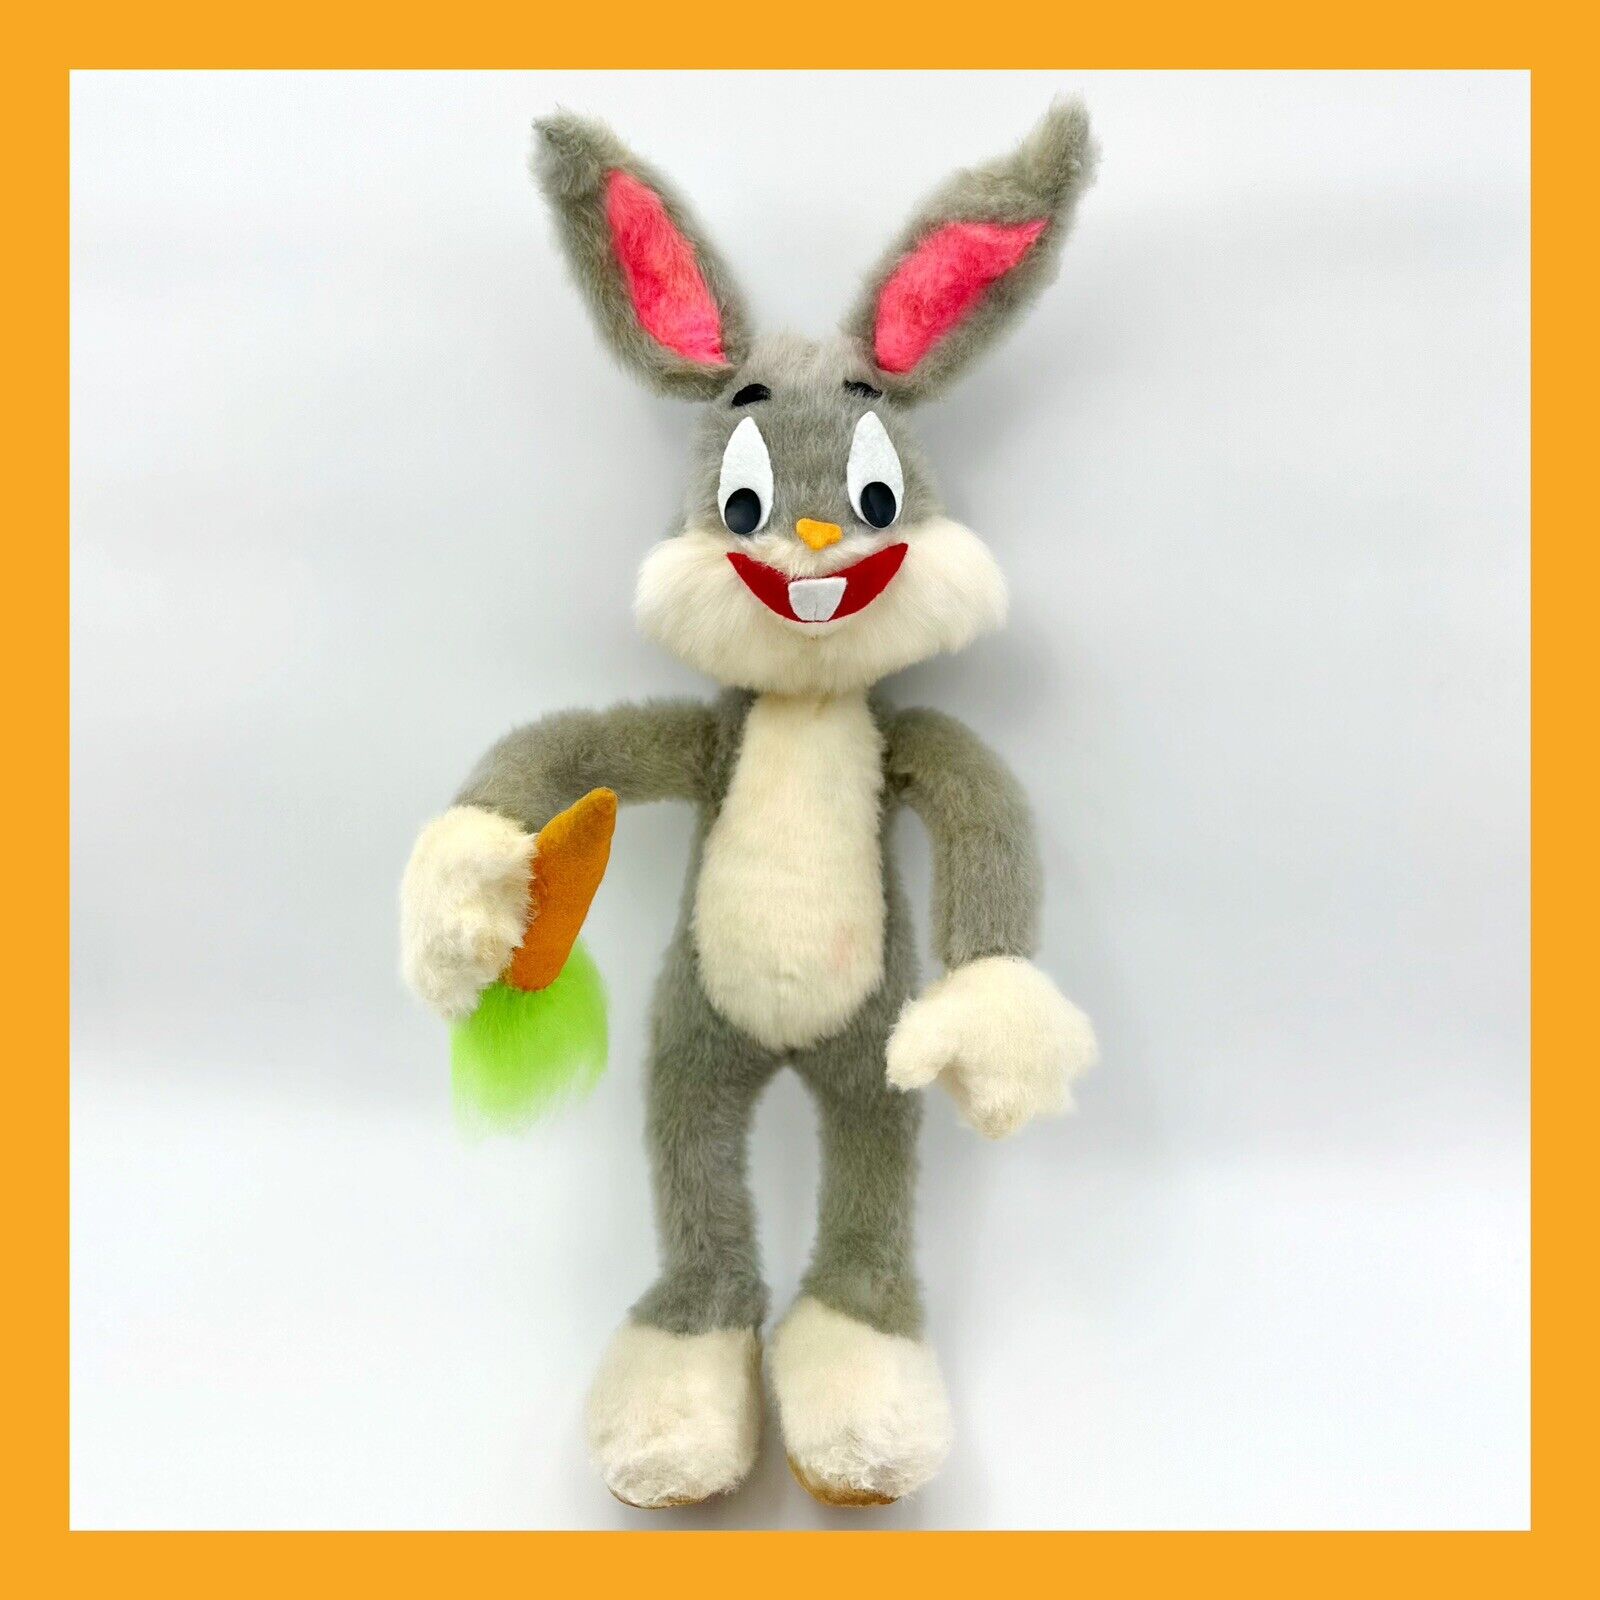 ❤️Vintage 1968 Bugs Bunny Plush 21” Doll by Mighty Star Ltd.❤️